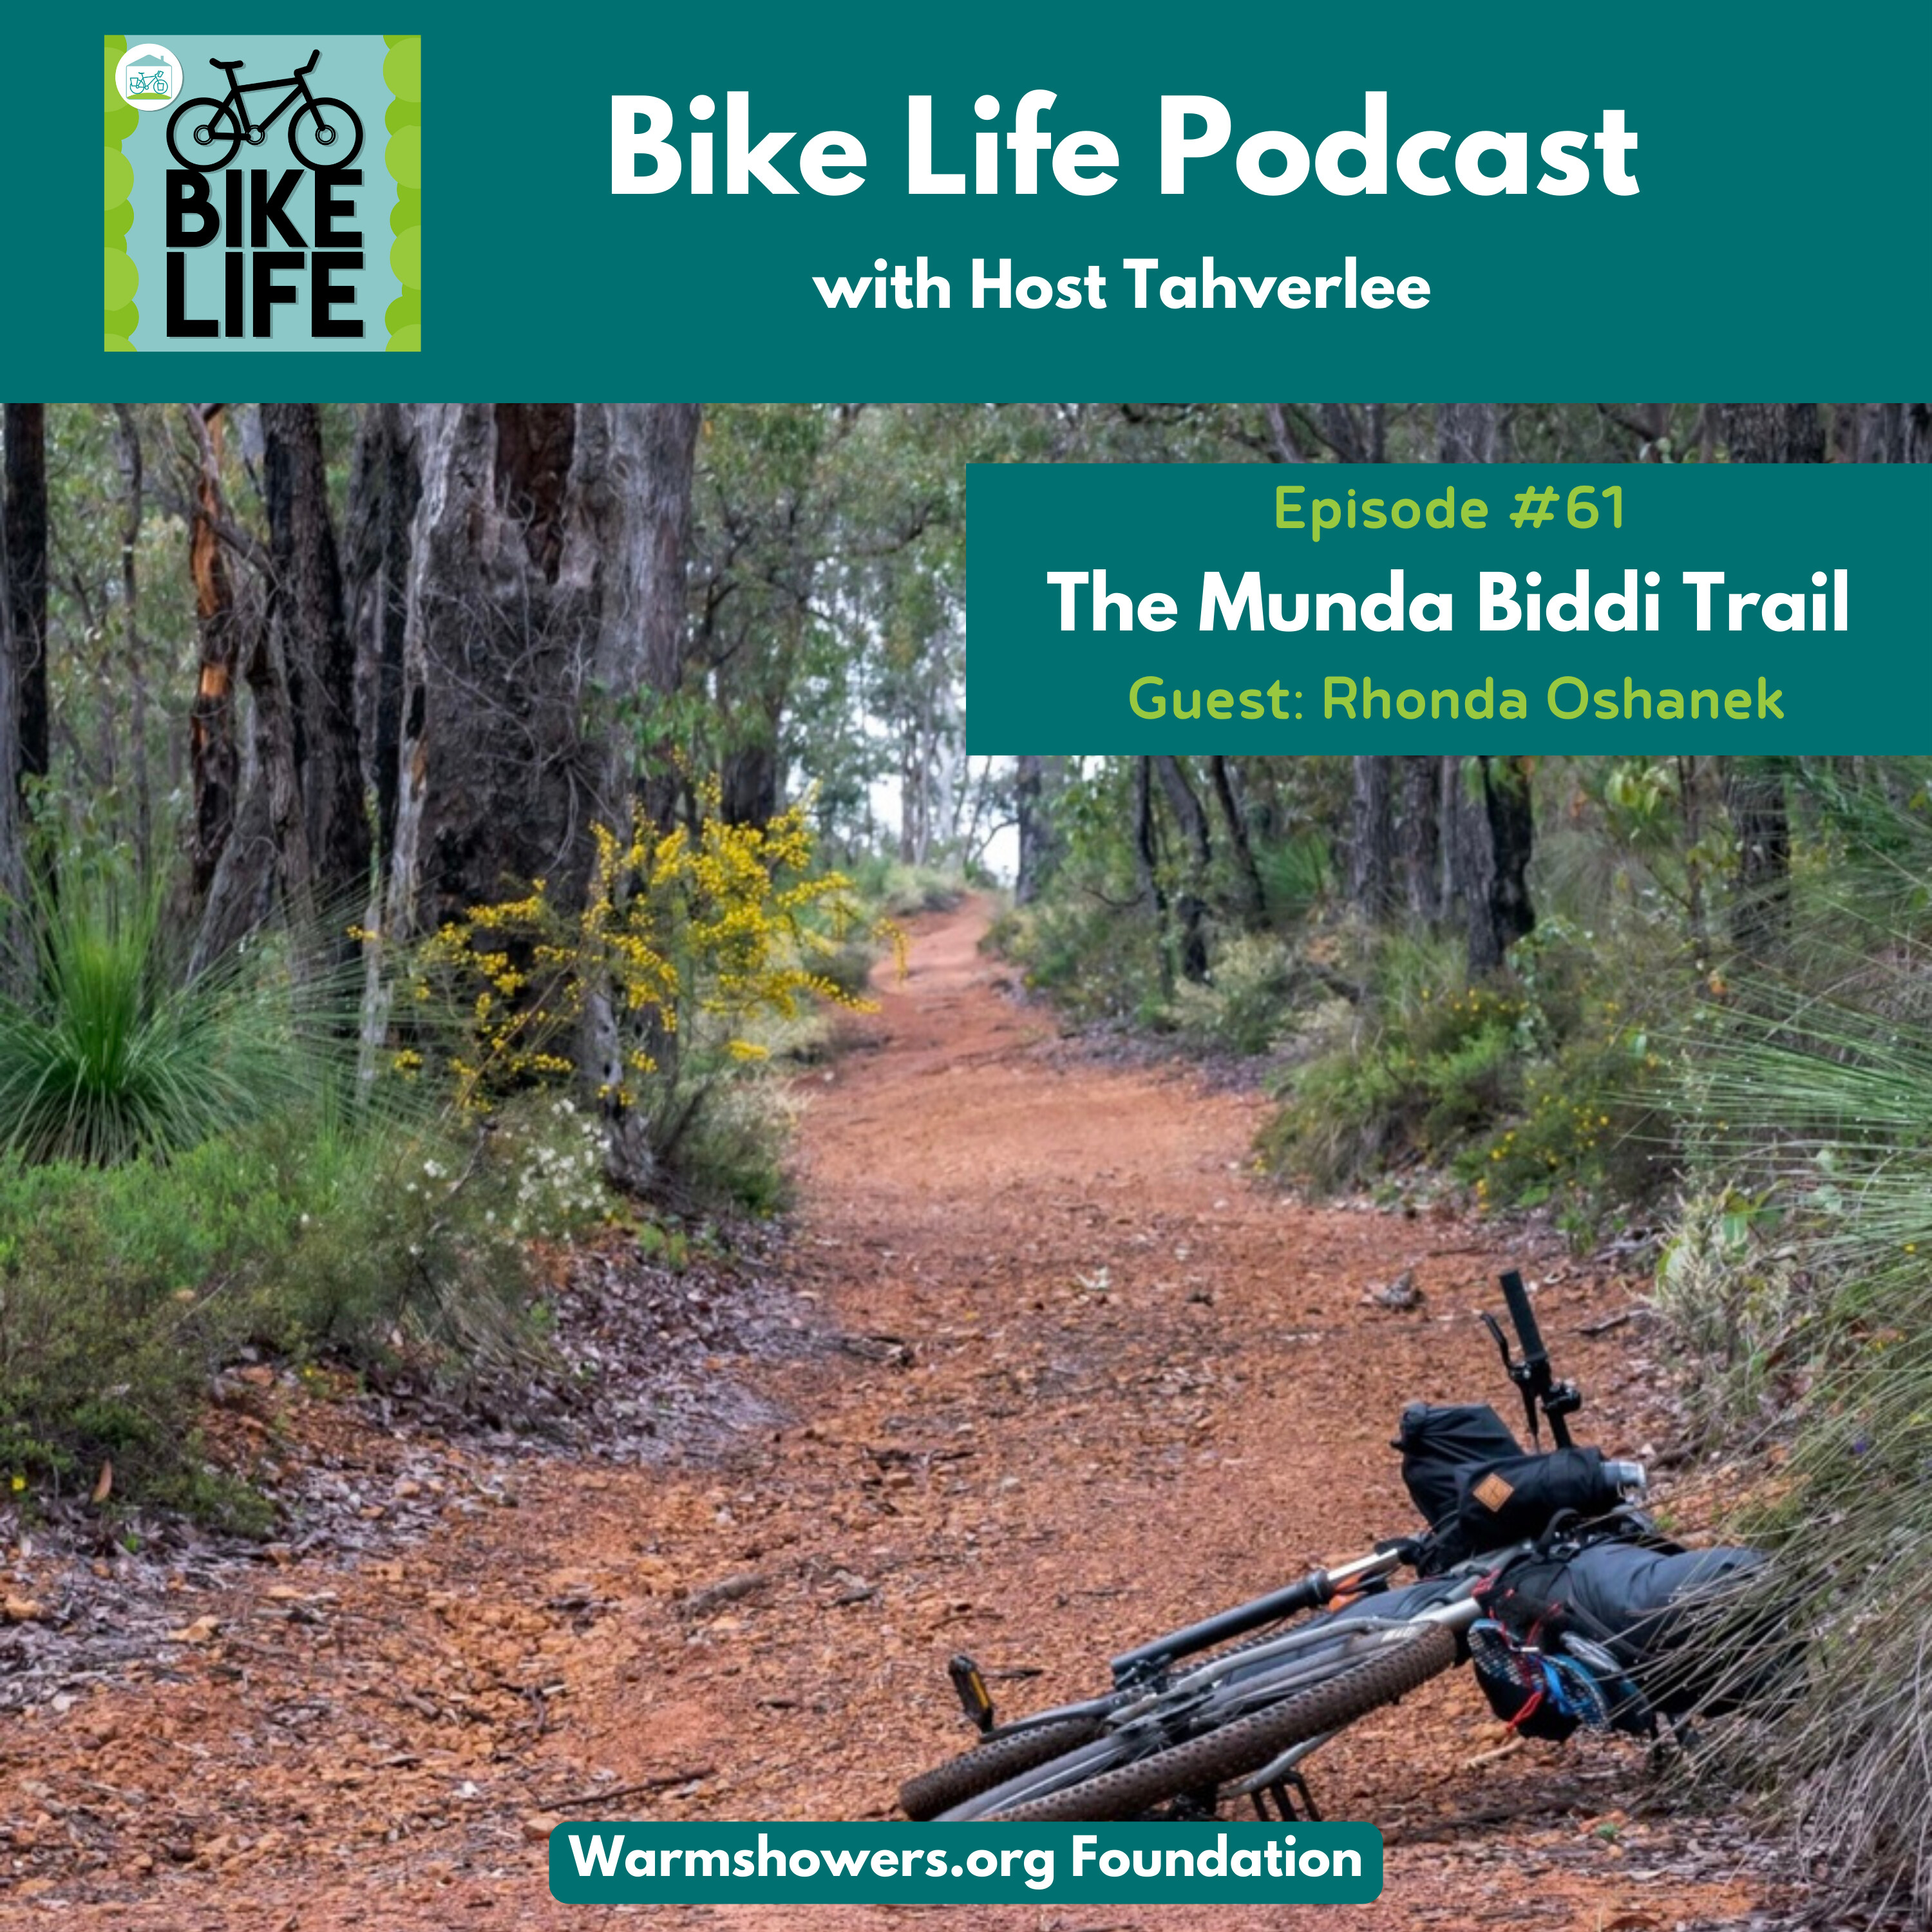 The Munda Biddi Trail